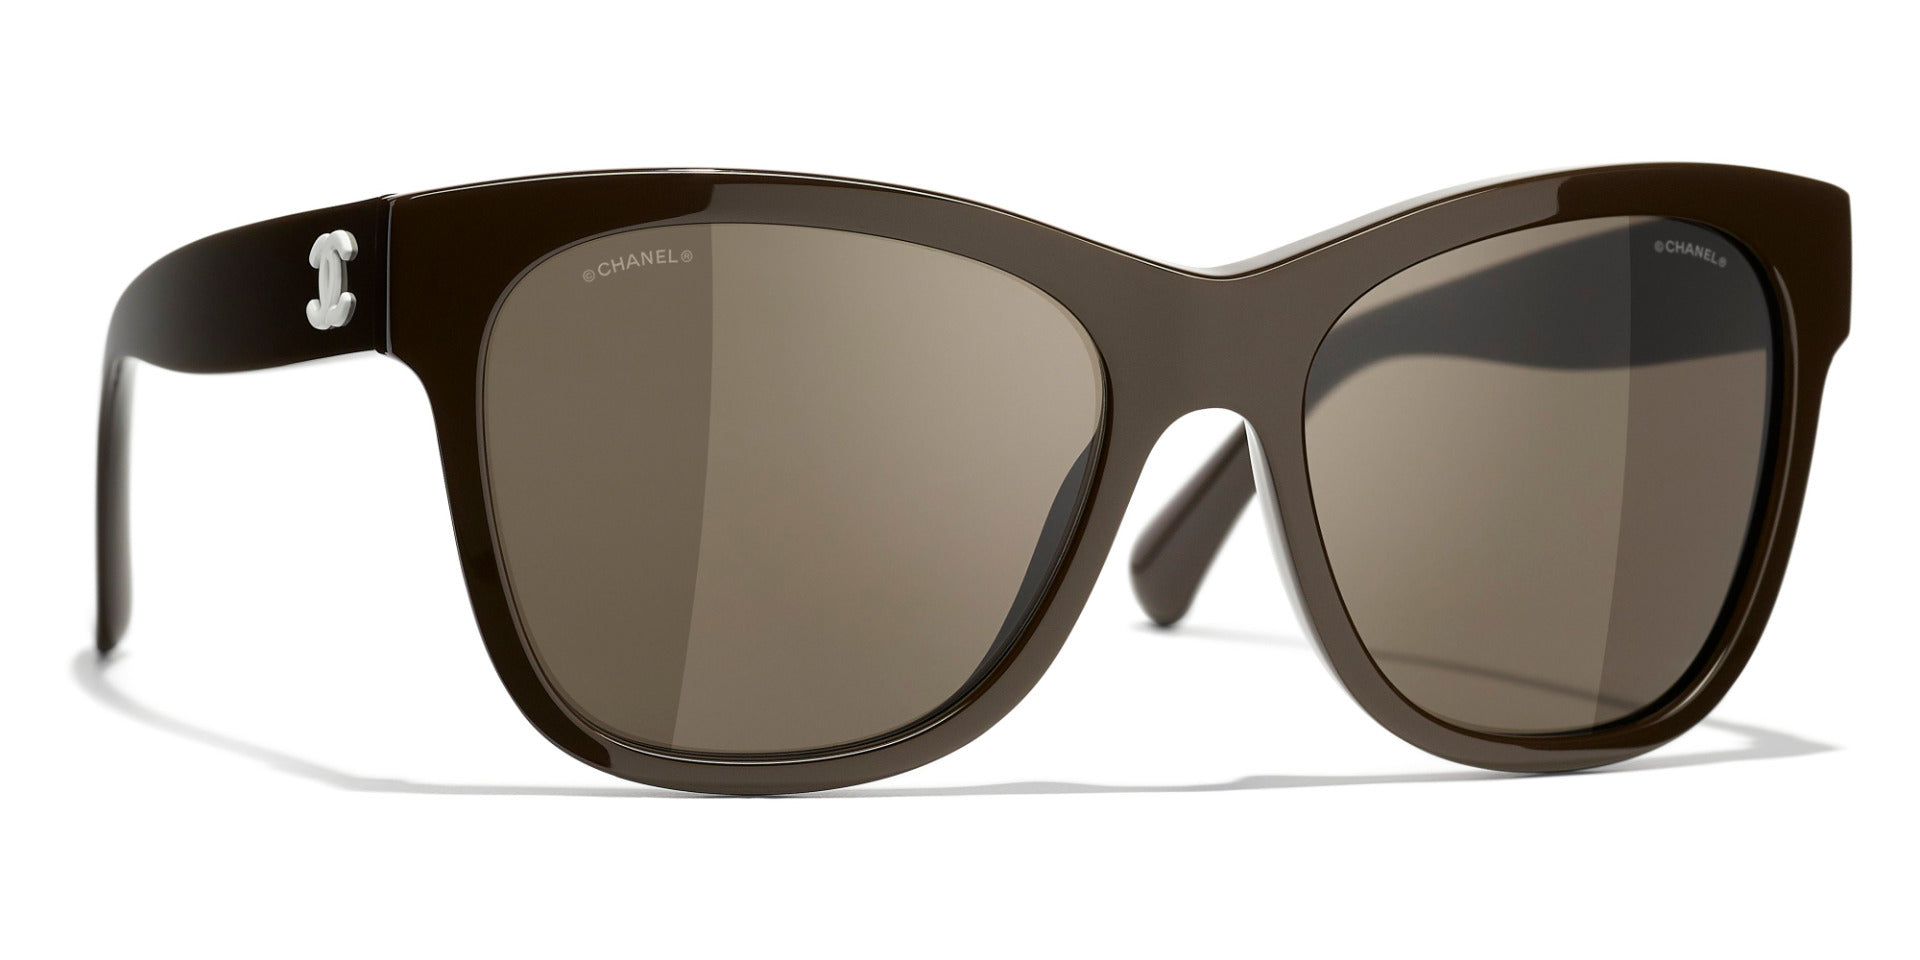 Chanel C sunglasses - Jowellafashion